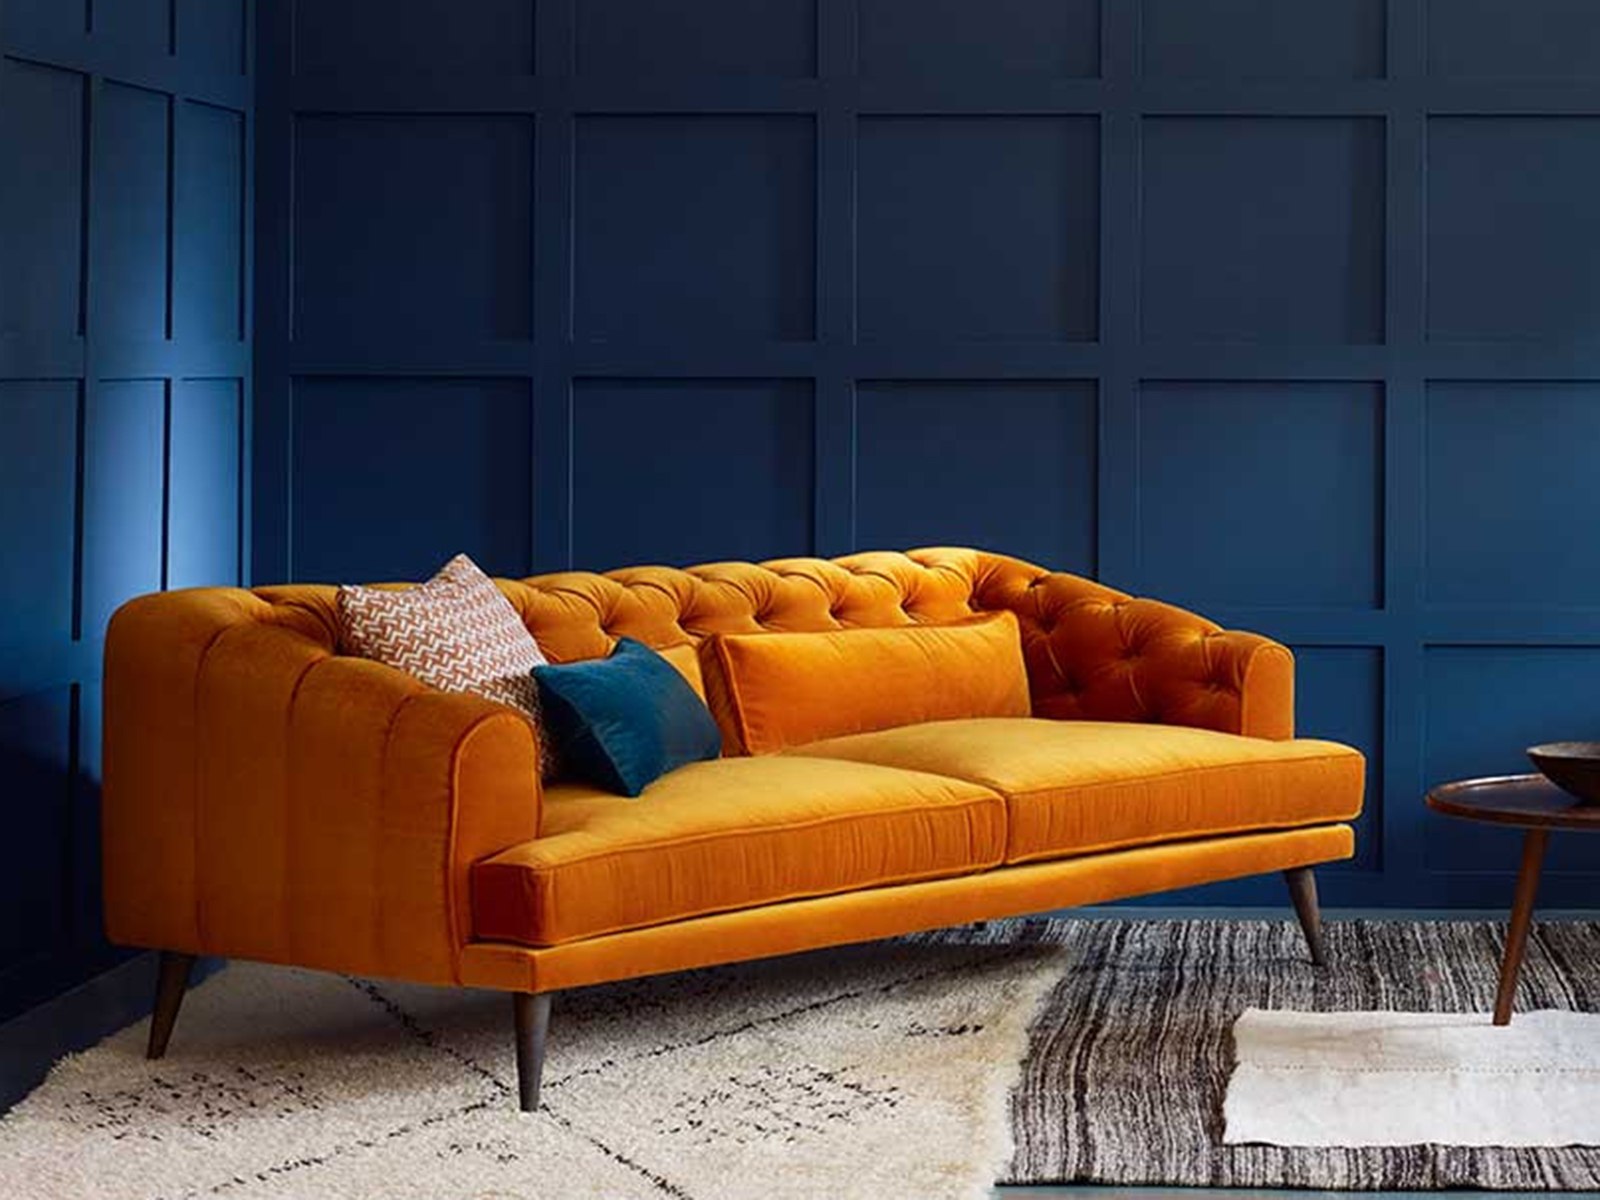 sofa. +110 Unique Living Room Furniture Pieces That Amaze Everyone - 3